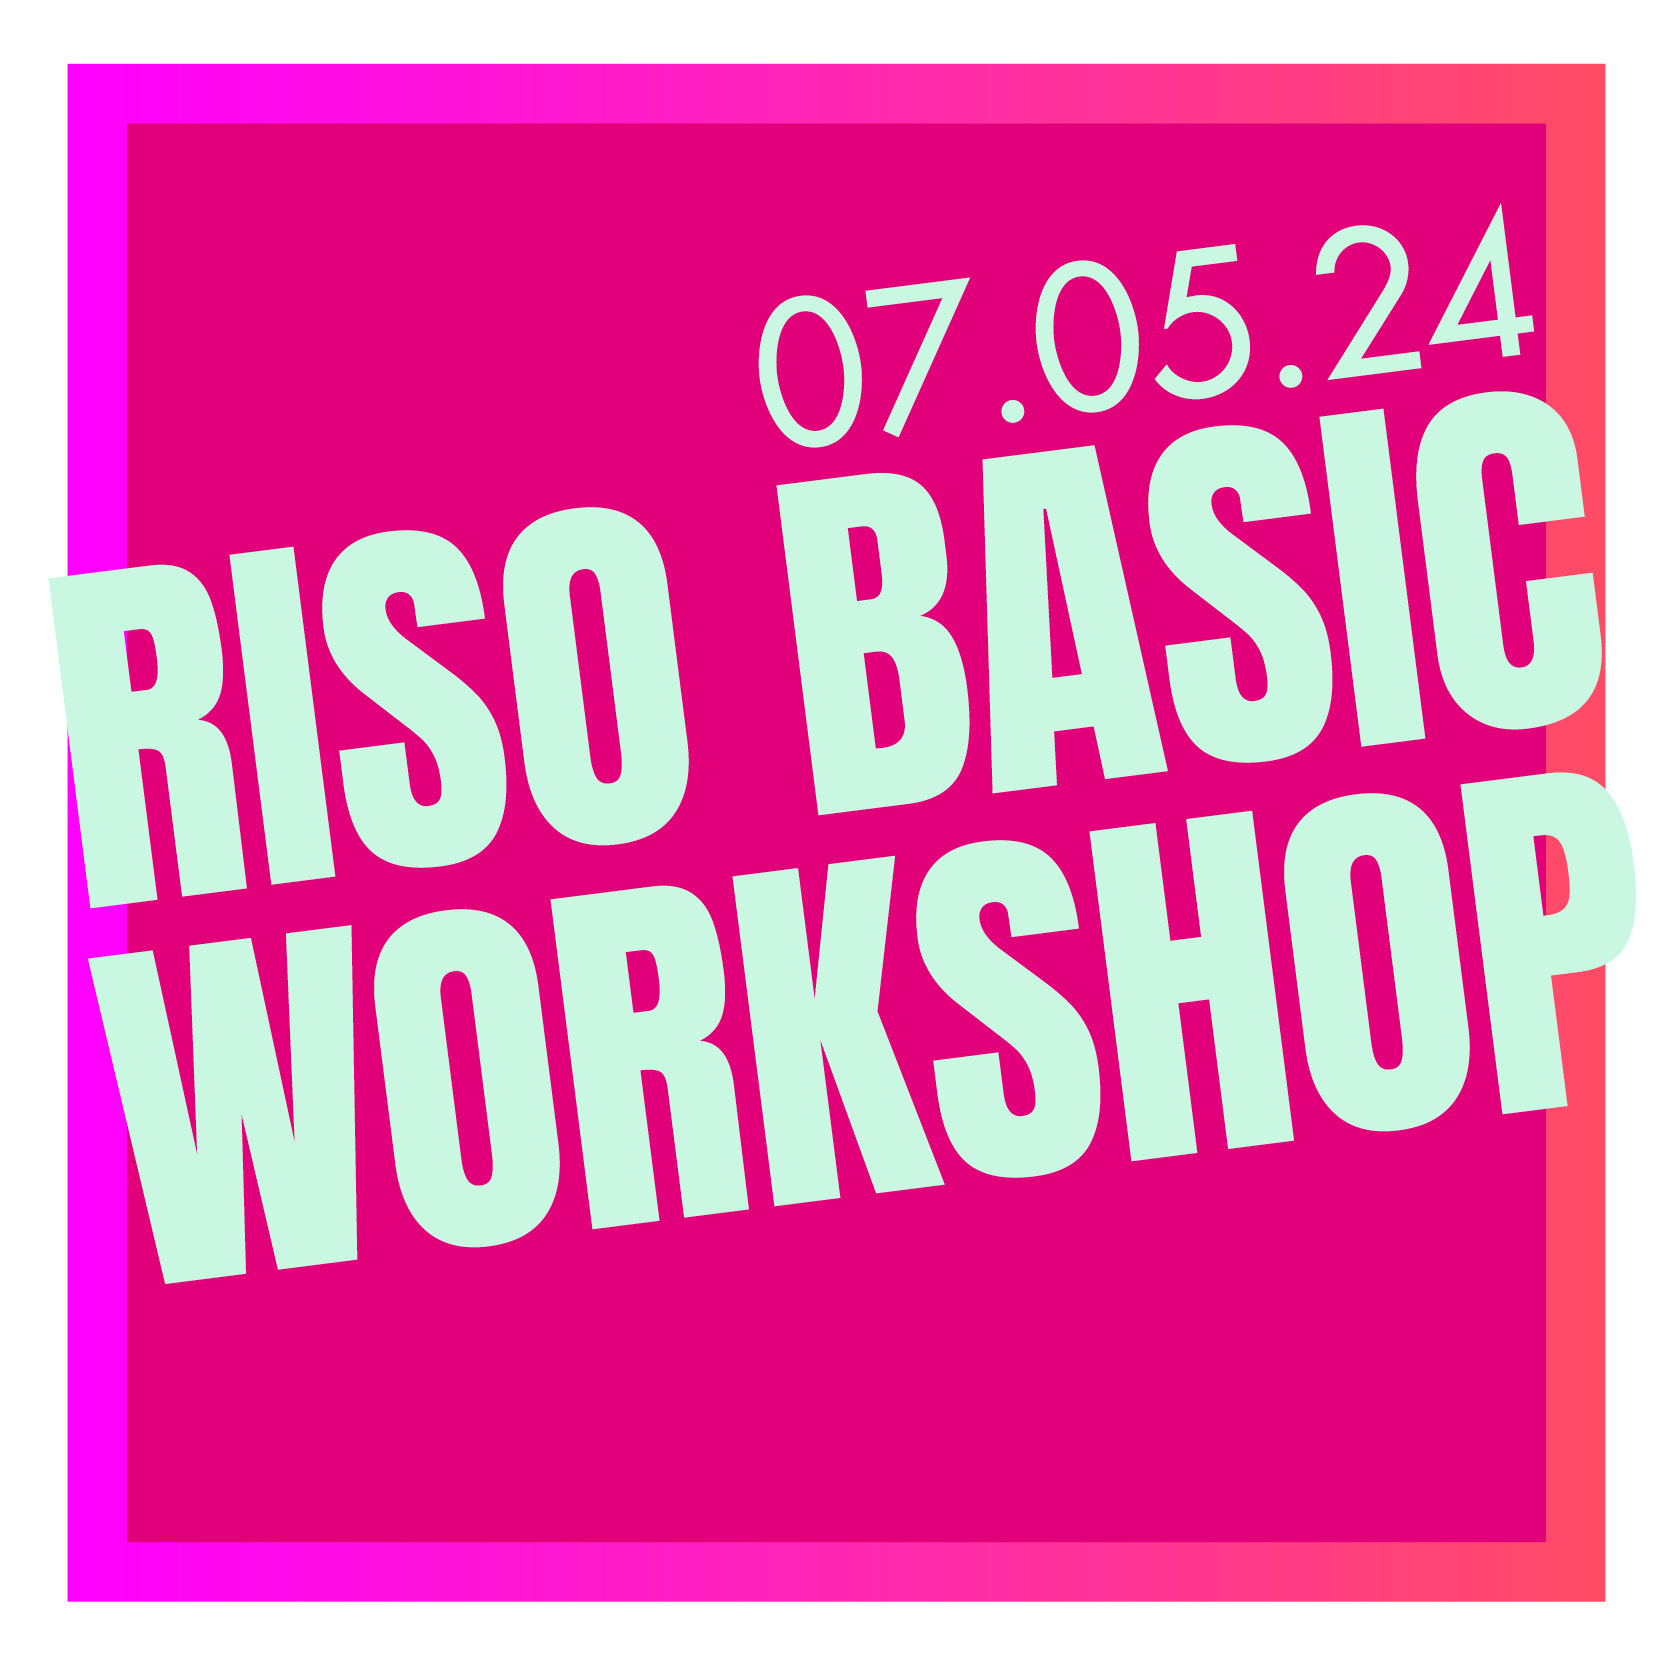 RISO BASIC WORKSHOP 07.05.24